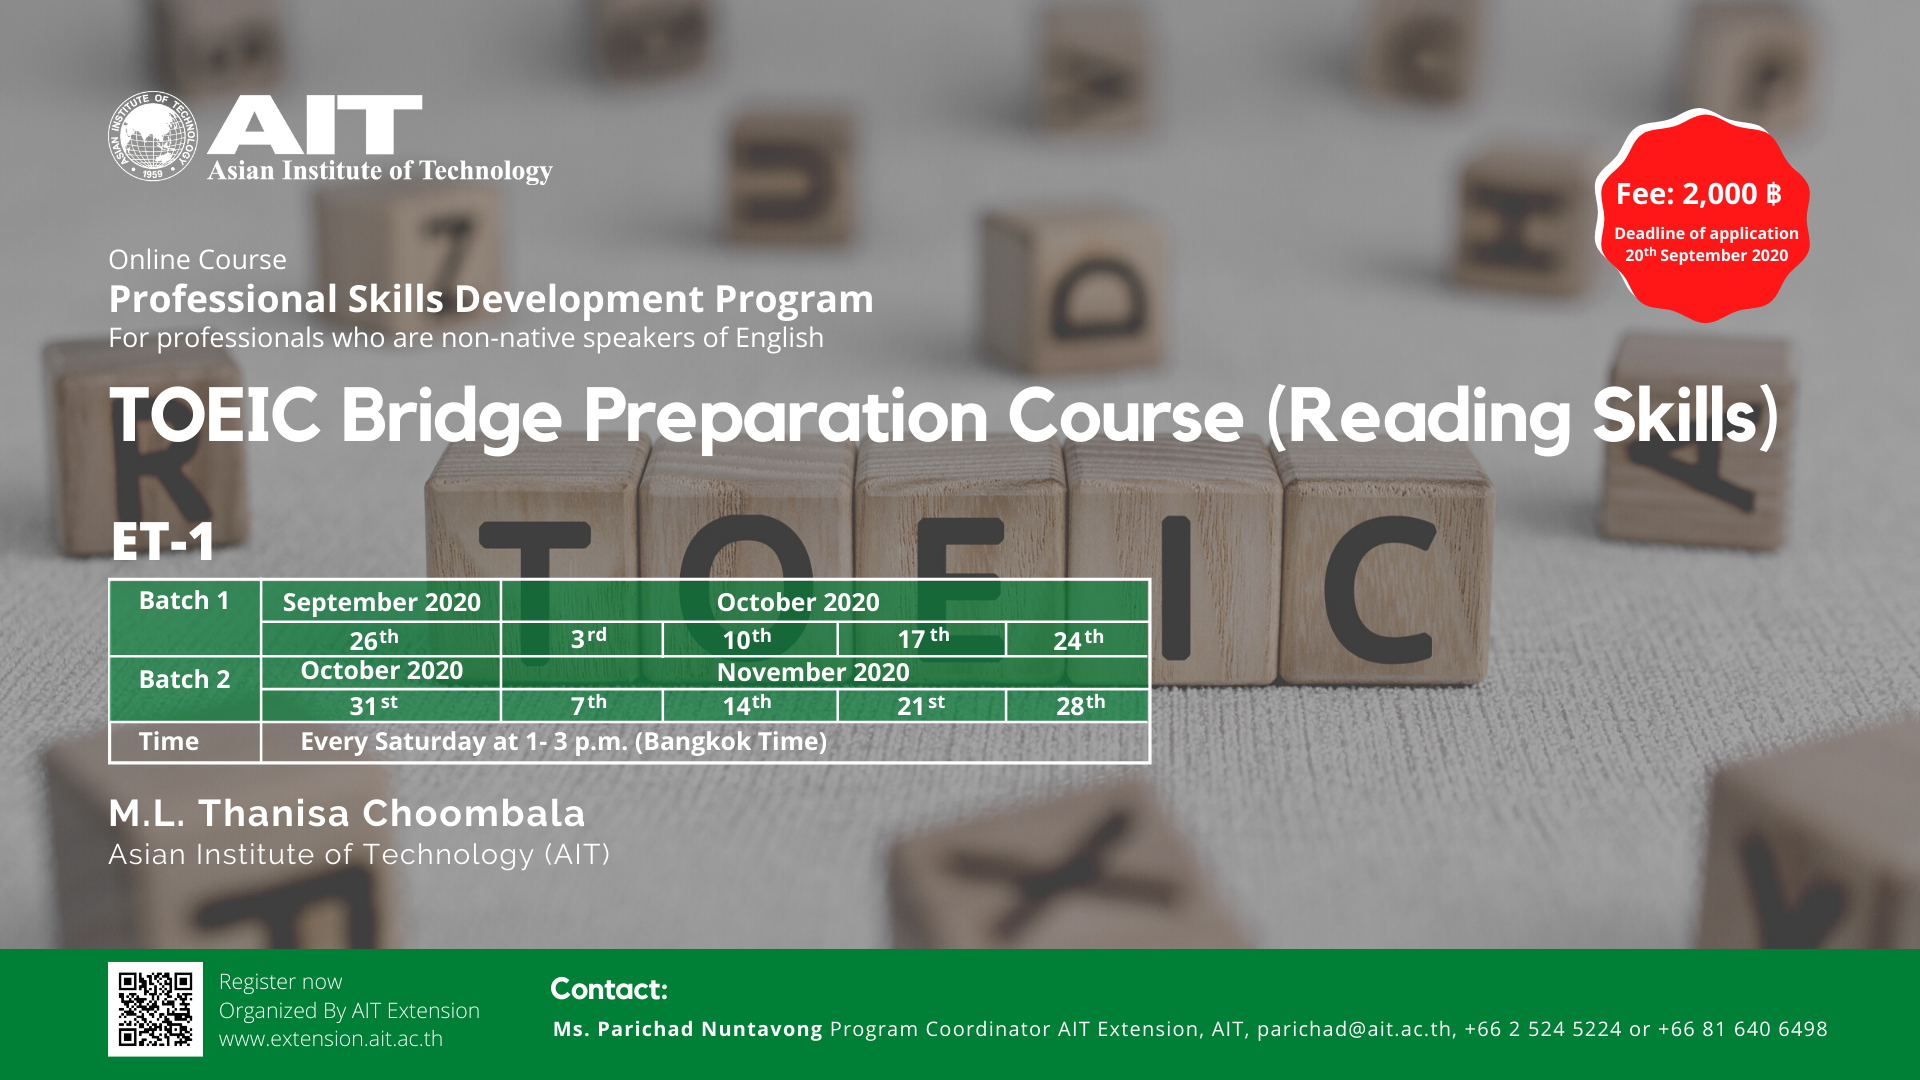 Online training course on “TOEIC Bridge Preparation Course (Reading Skills)”